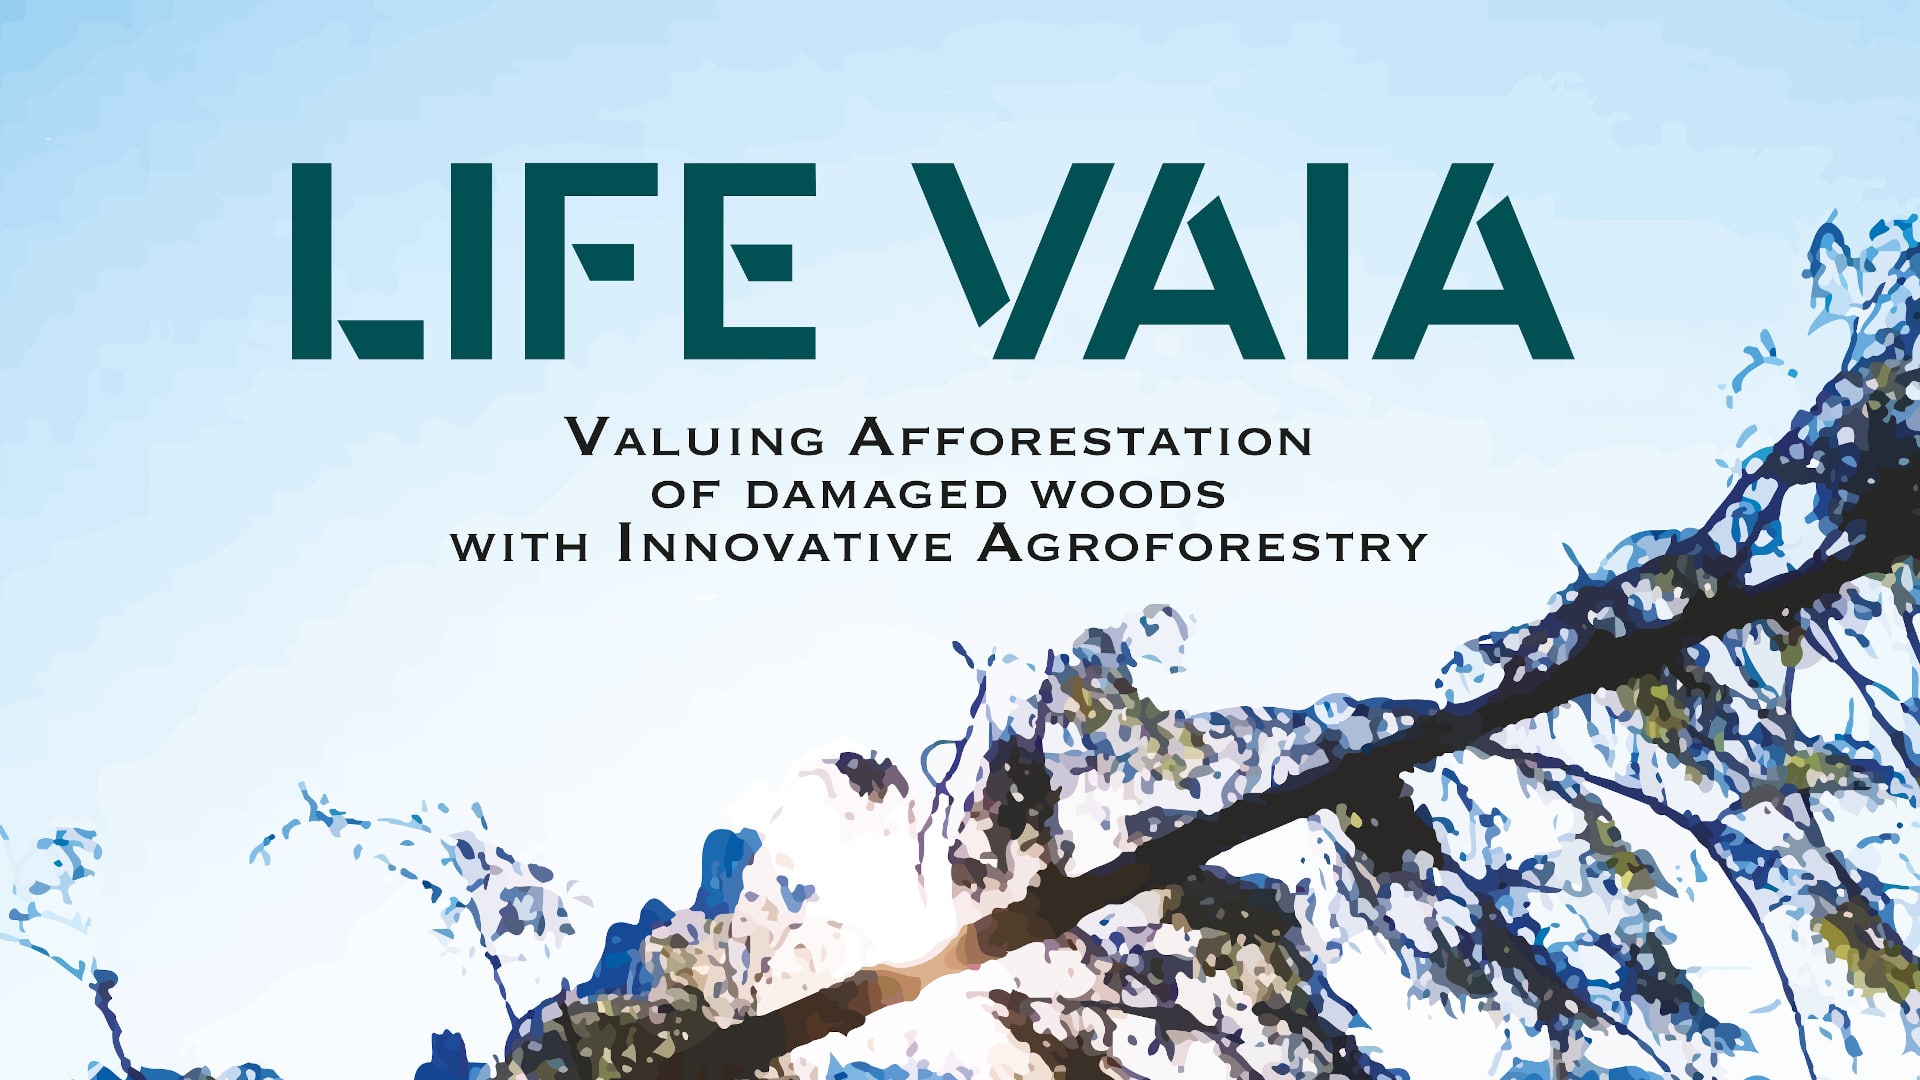 Valuing Afforestation of damaged woods with Innovative Agroforestry